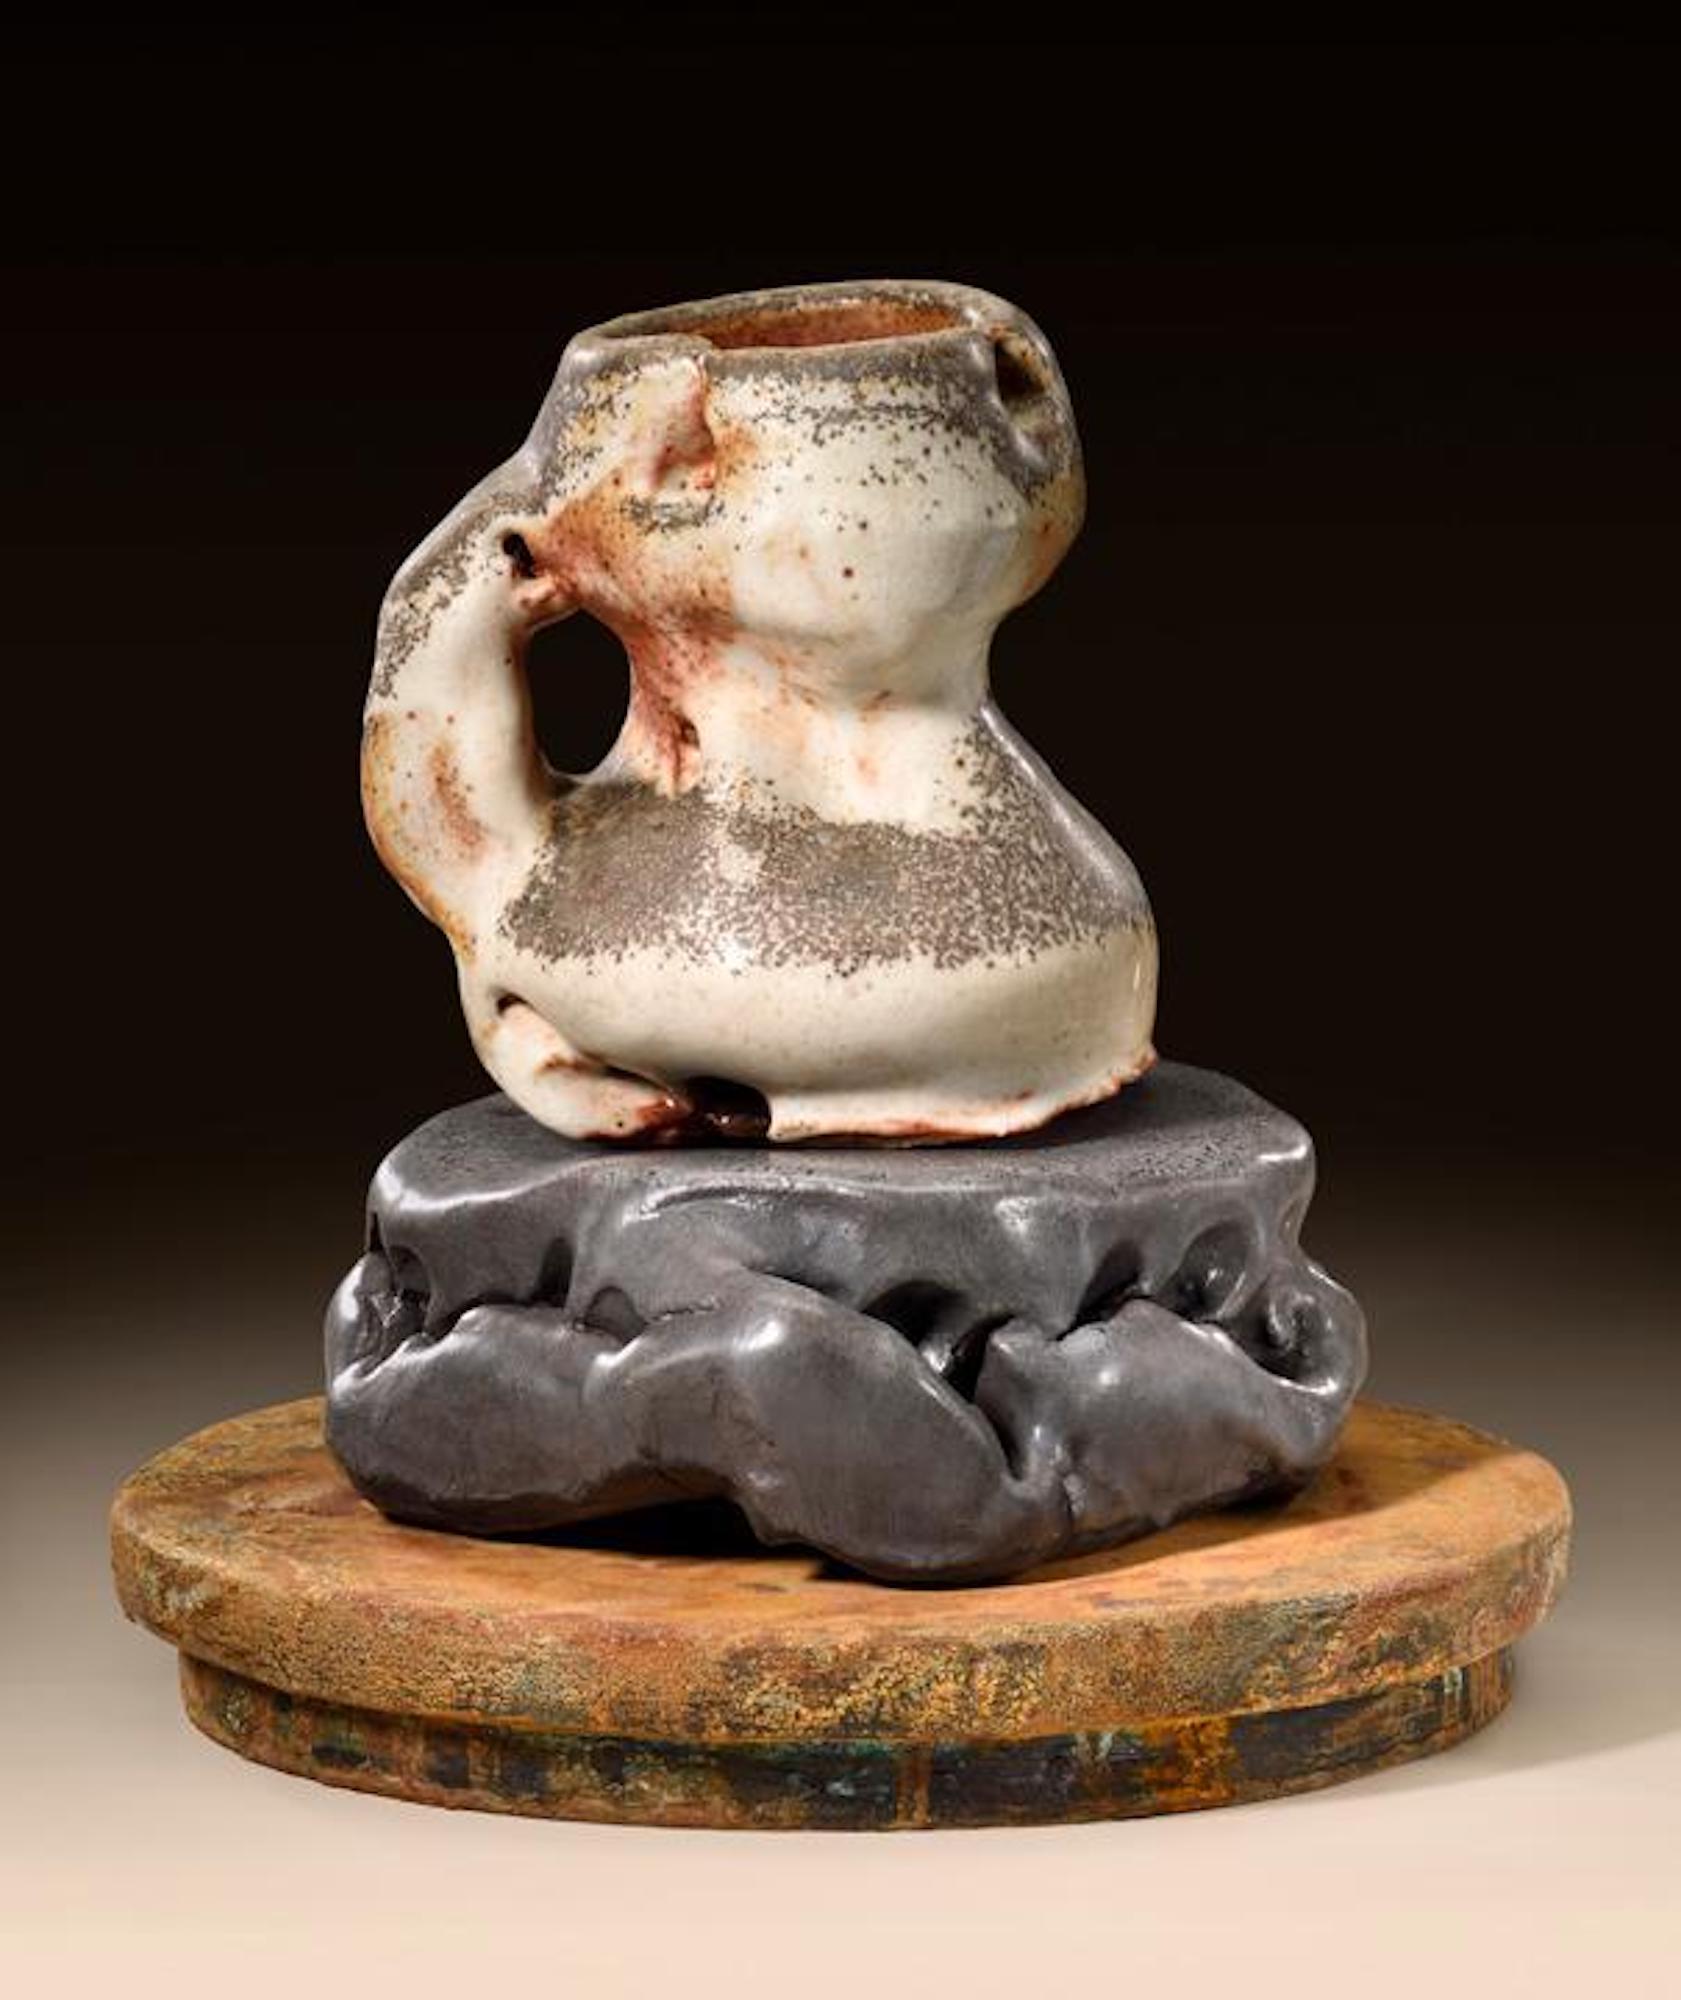 Contemporary Richard Hirsch Ceramic Scholar Rock Cup Sculpture #16, 2016 For Sale